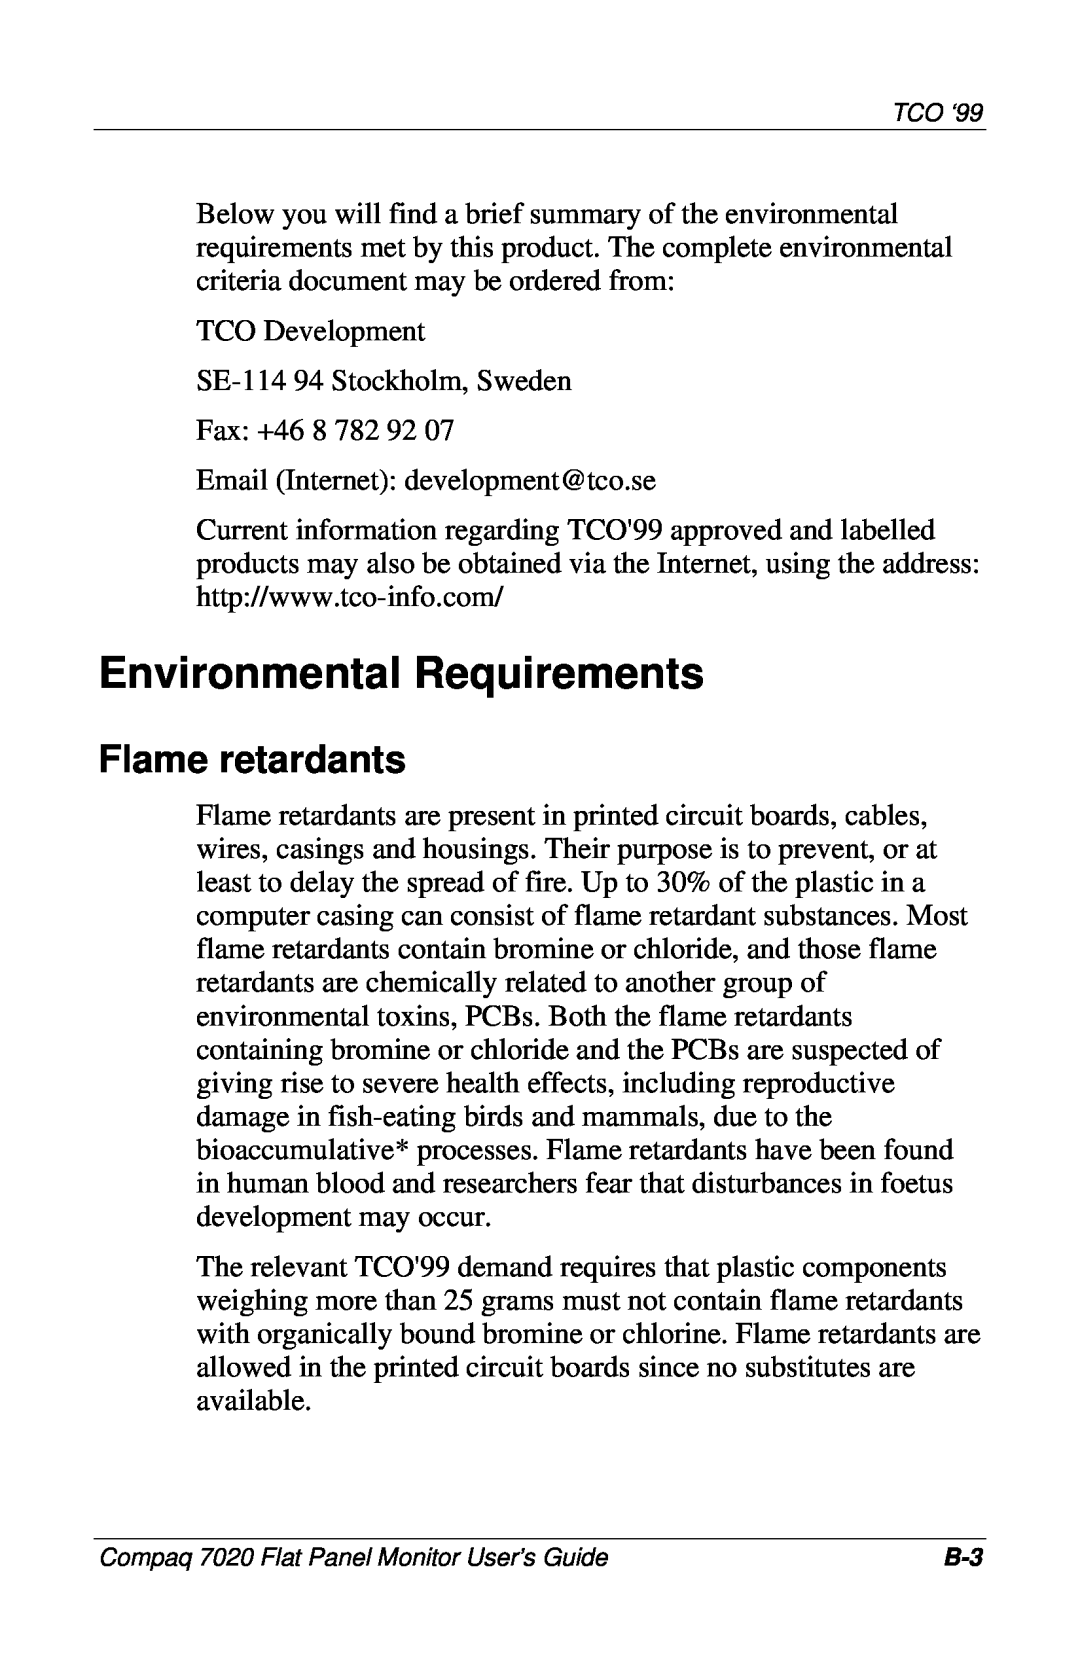 Compaq 7020 manual Environmental Requirements, Flame retardants 